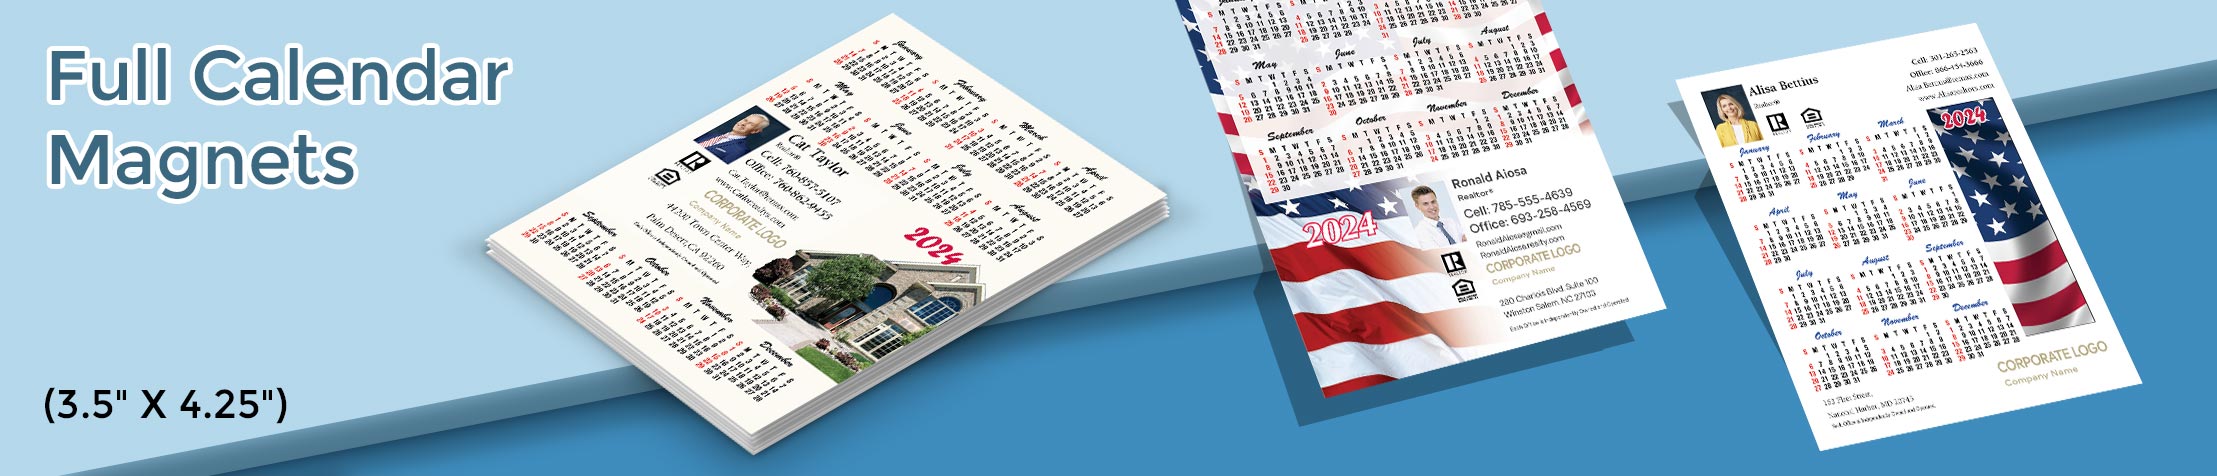 Century 21 Real Estate Full Calendar Magnets - Century 21 2019 calendars, 3.5” by 4.25” | BestPrintBuy.com